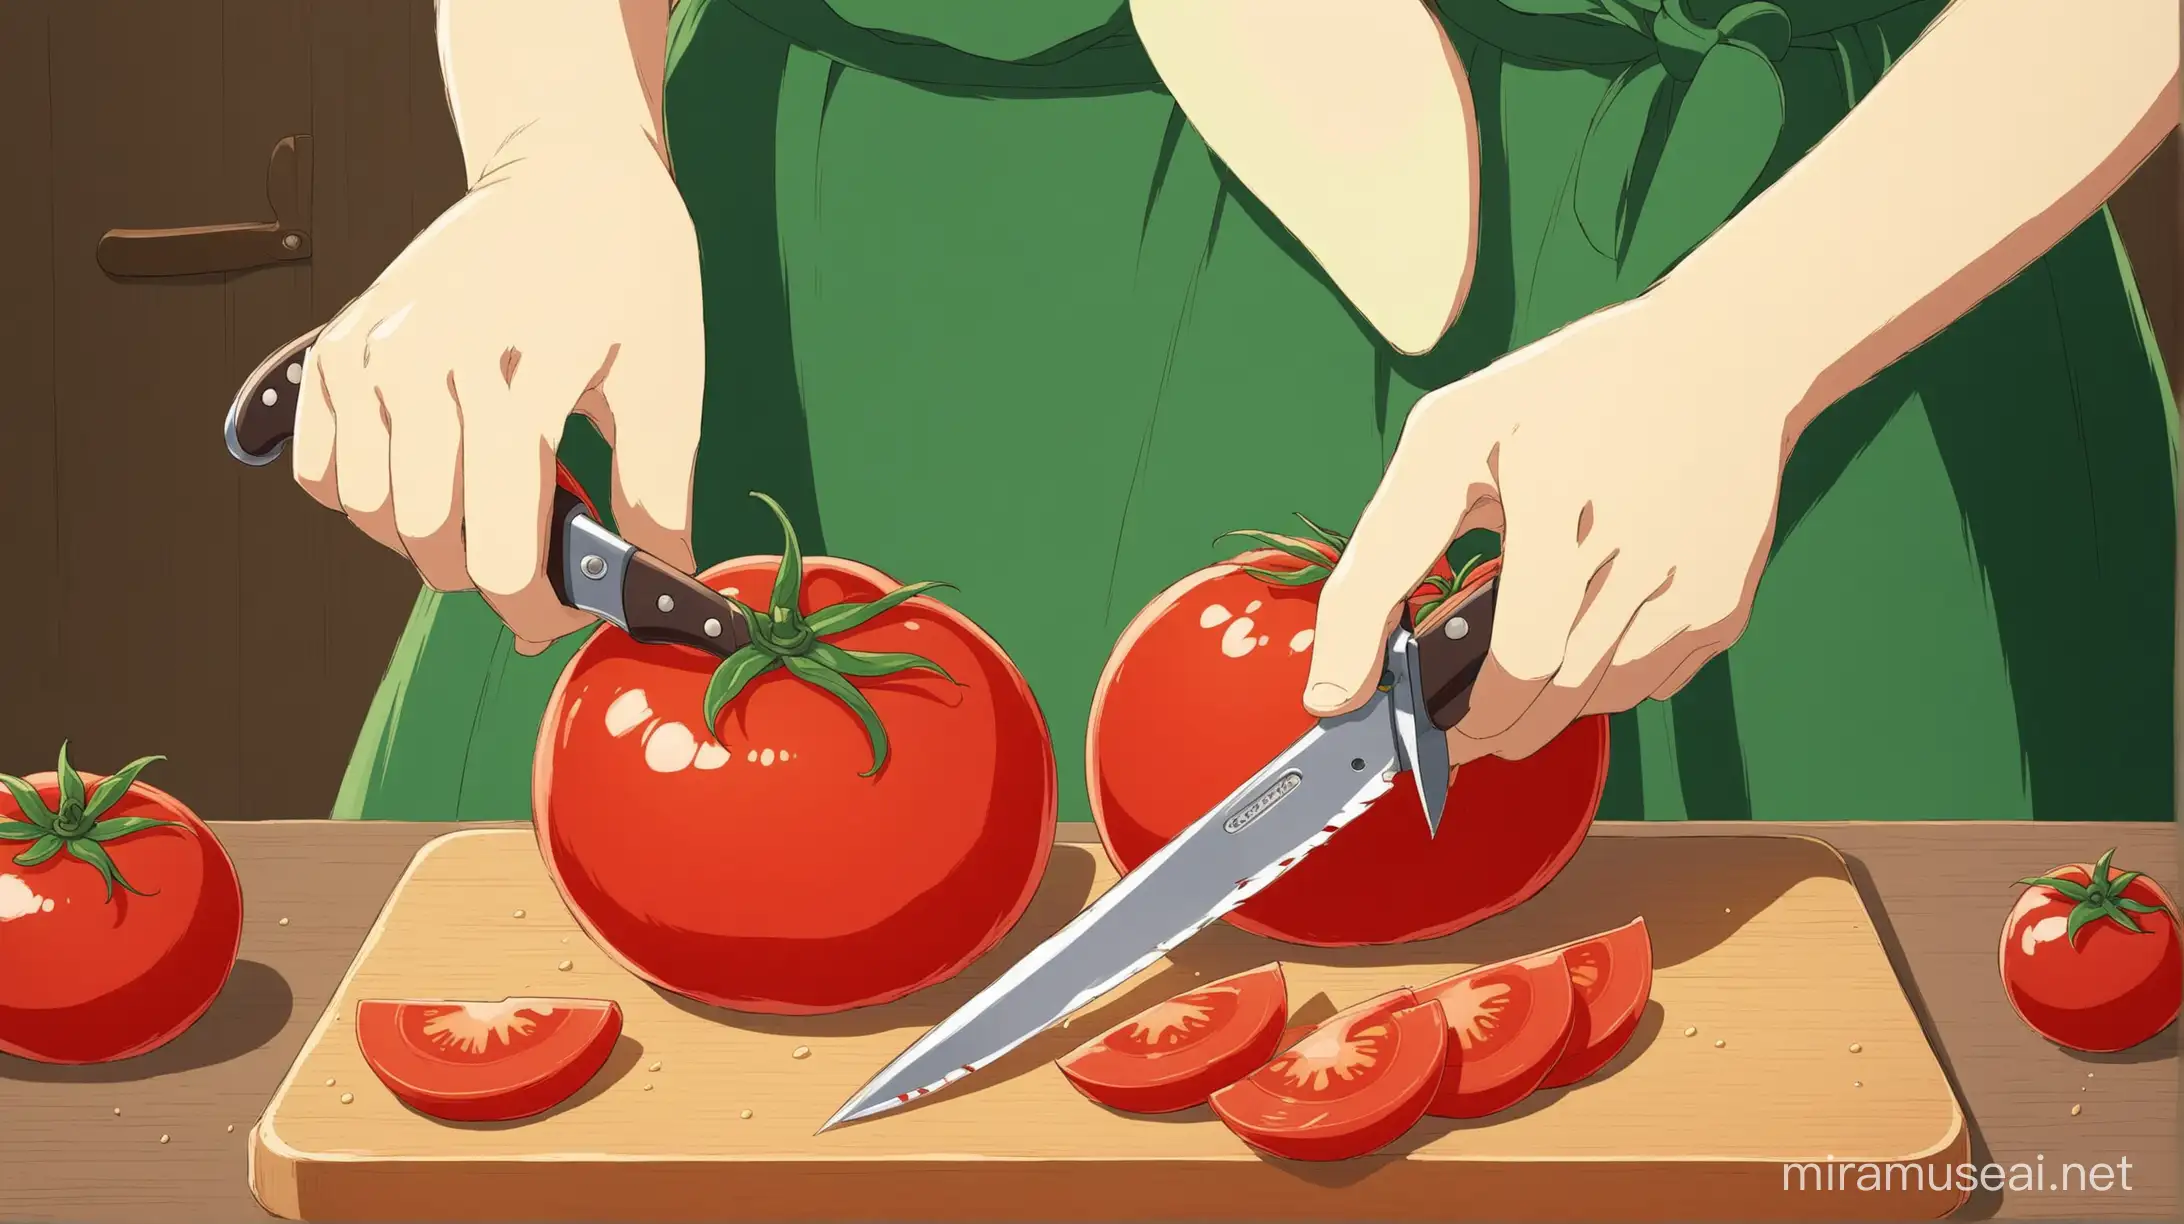 anime style hand  cutting tomato using knife, studio ghibli style,